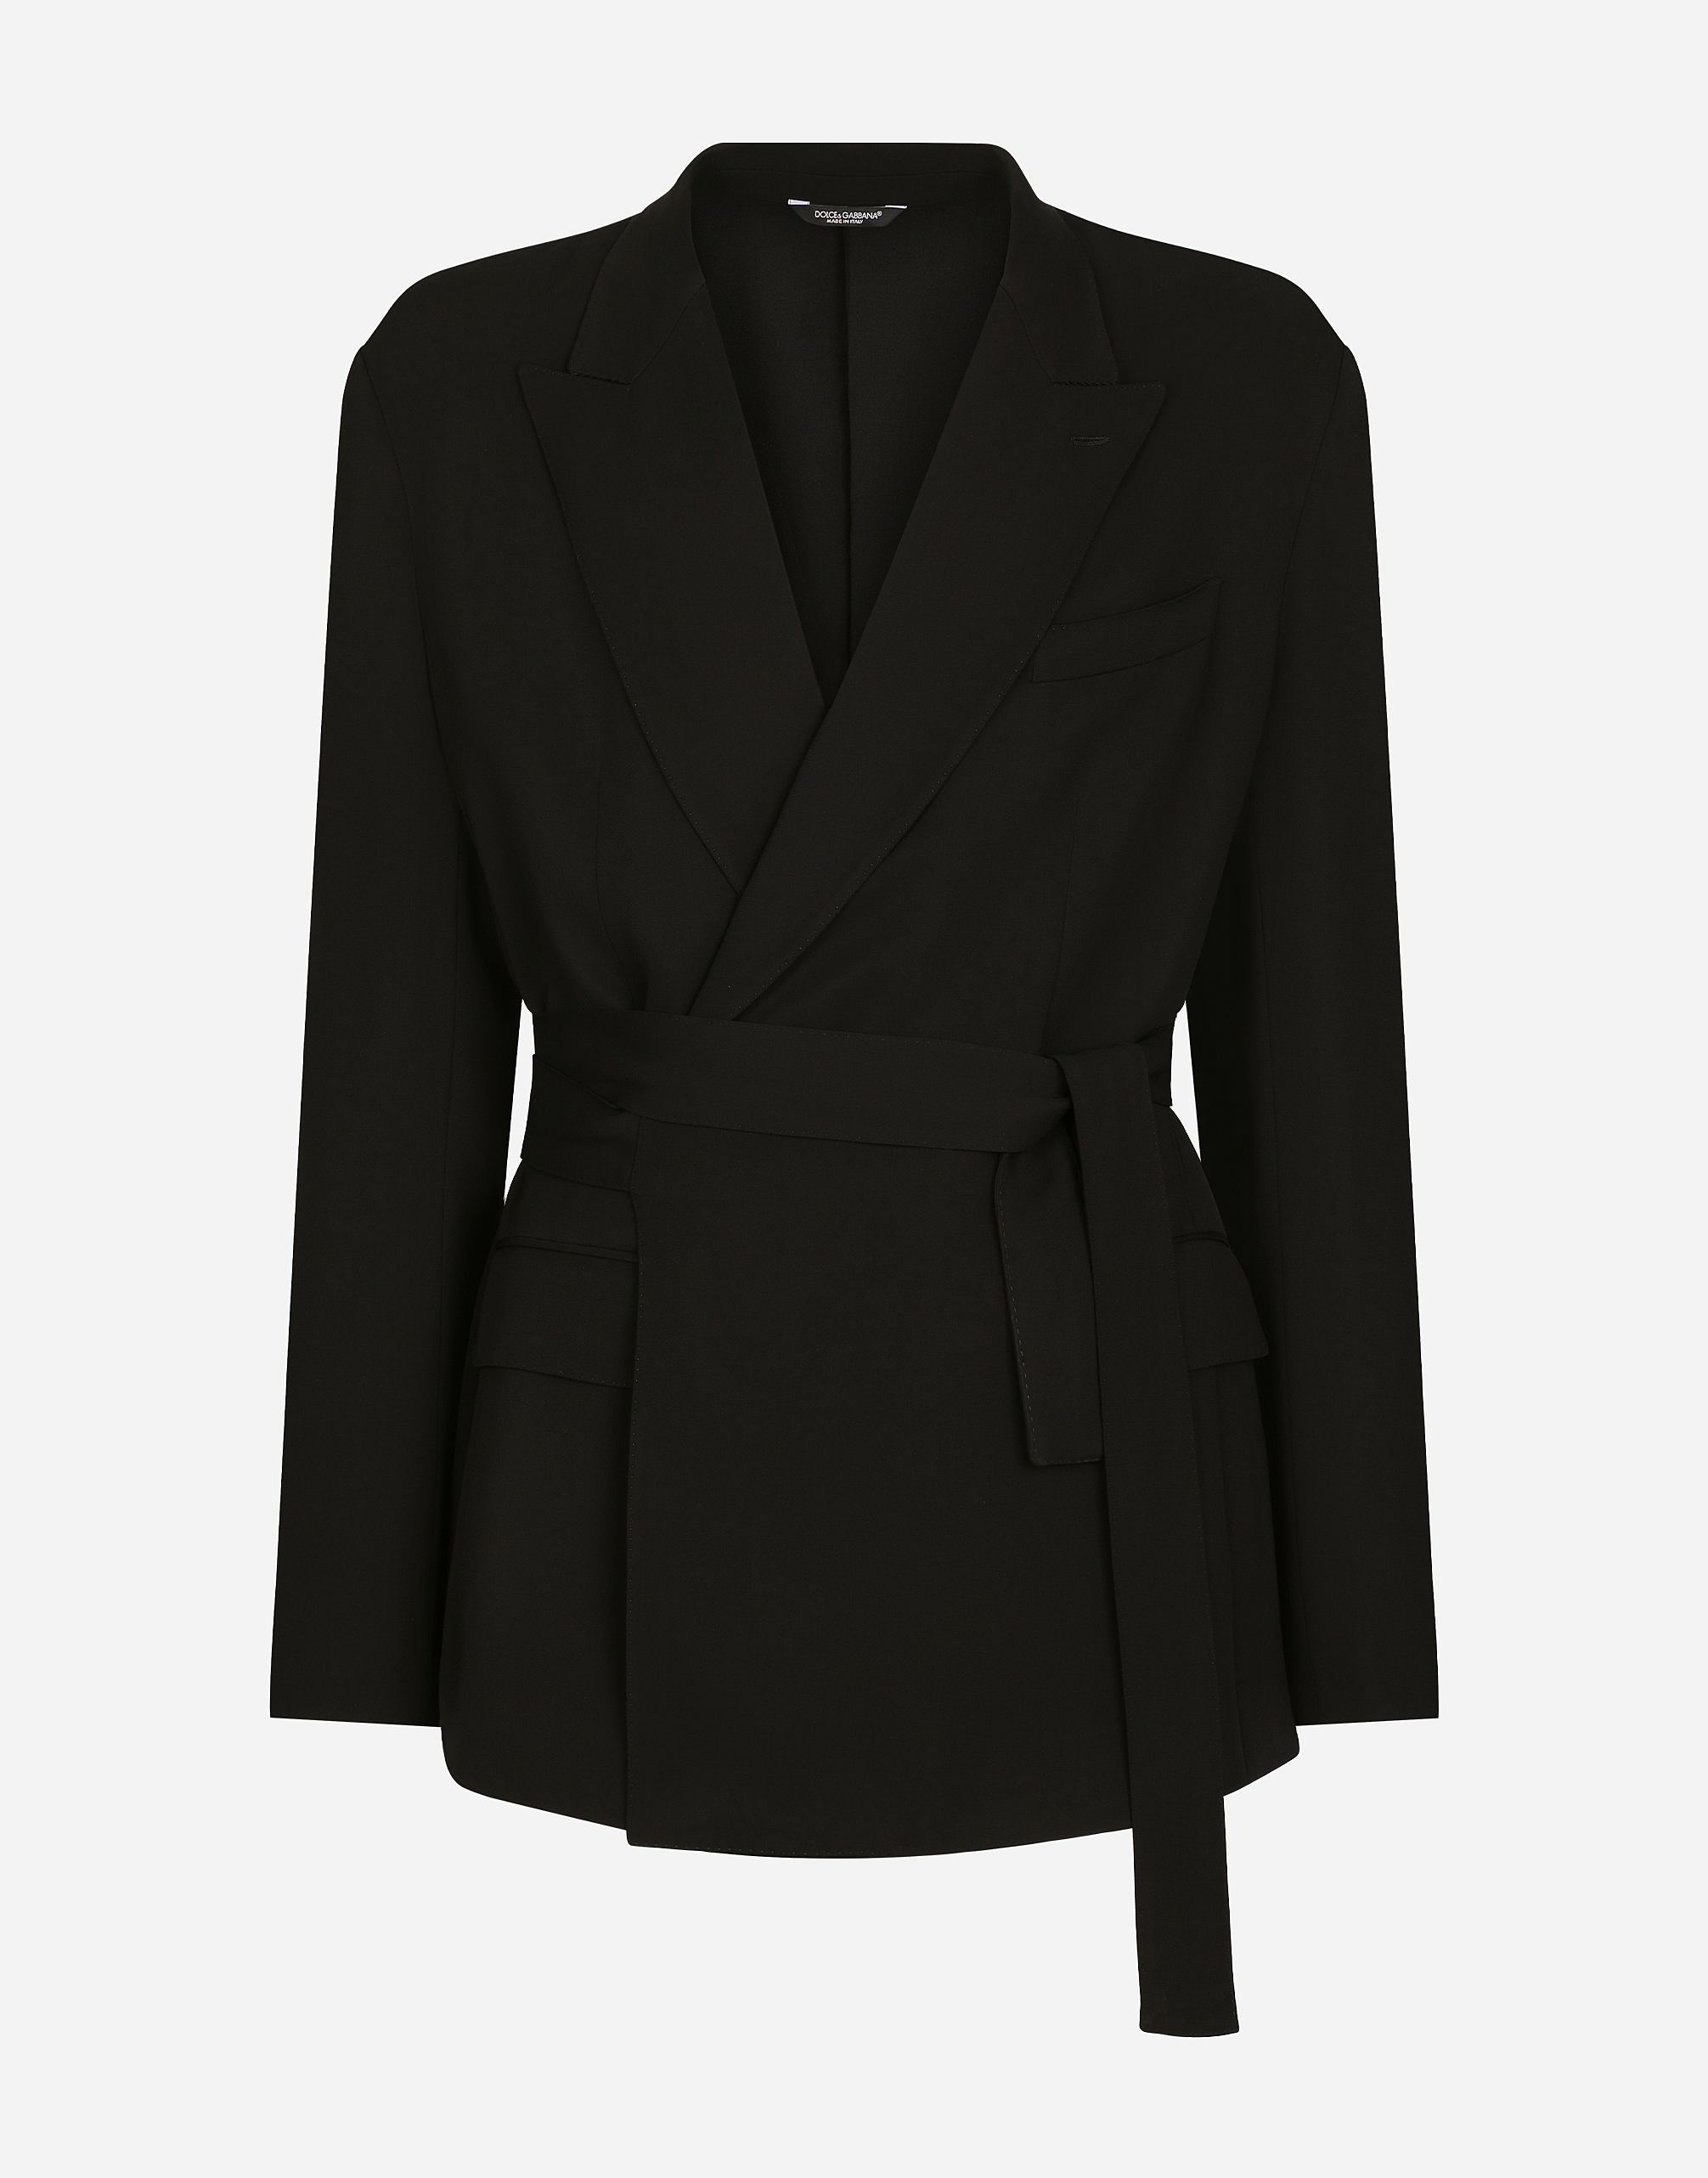 Belted stretch cady jacket in Black